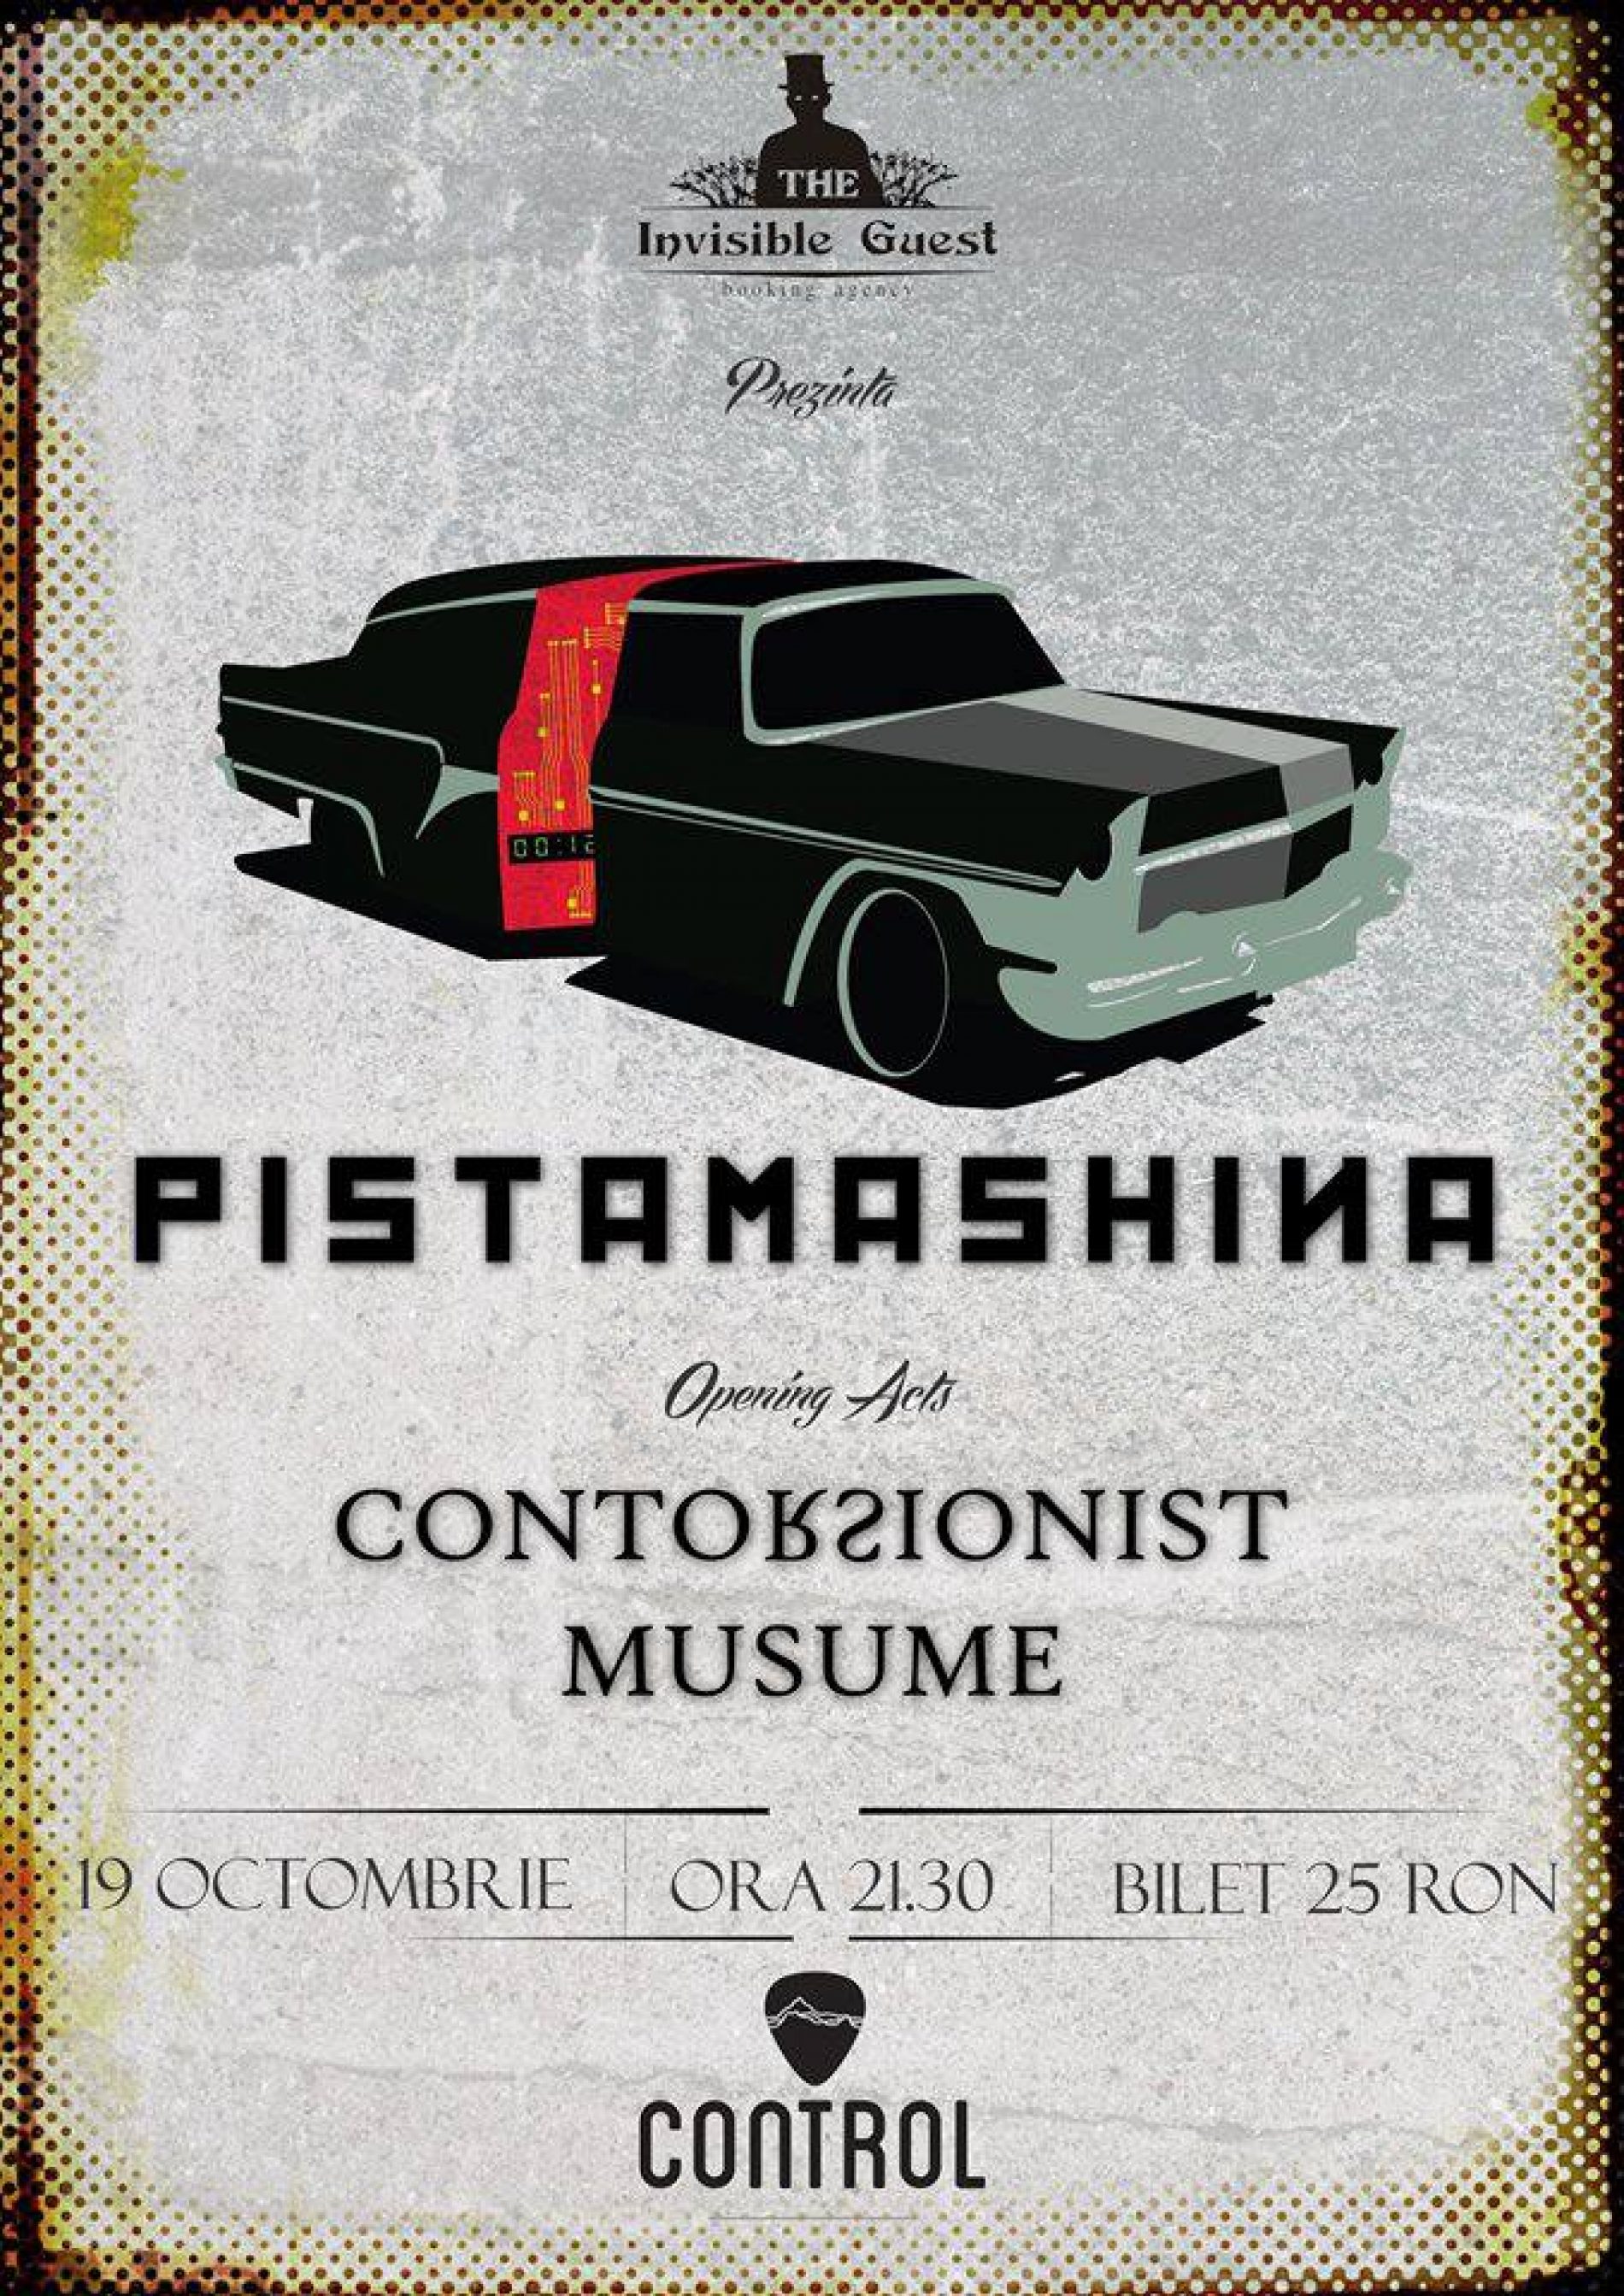 PISTAMASHINA (BG), Contorsionist, Musume: Concert in Control